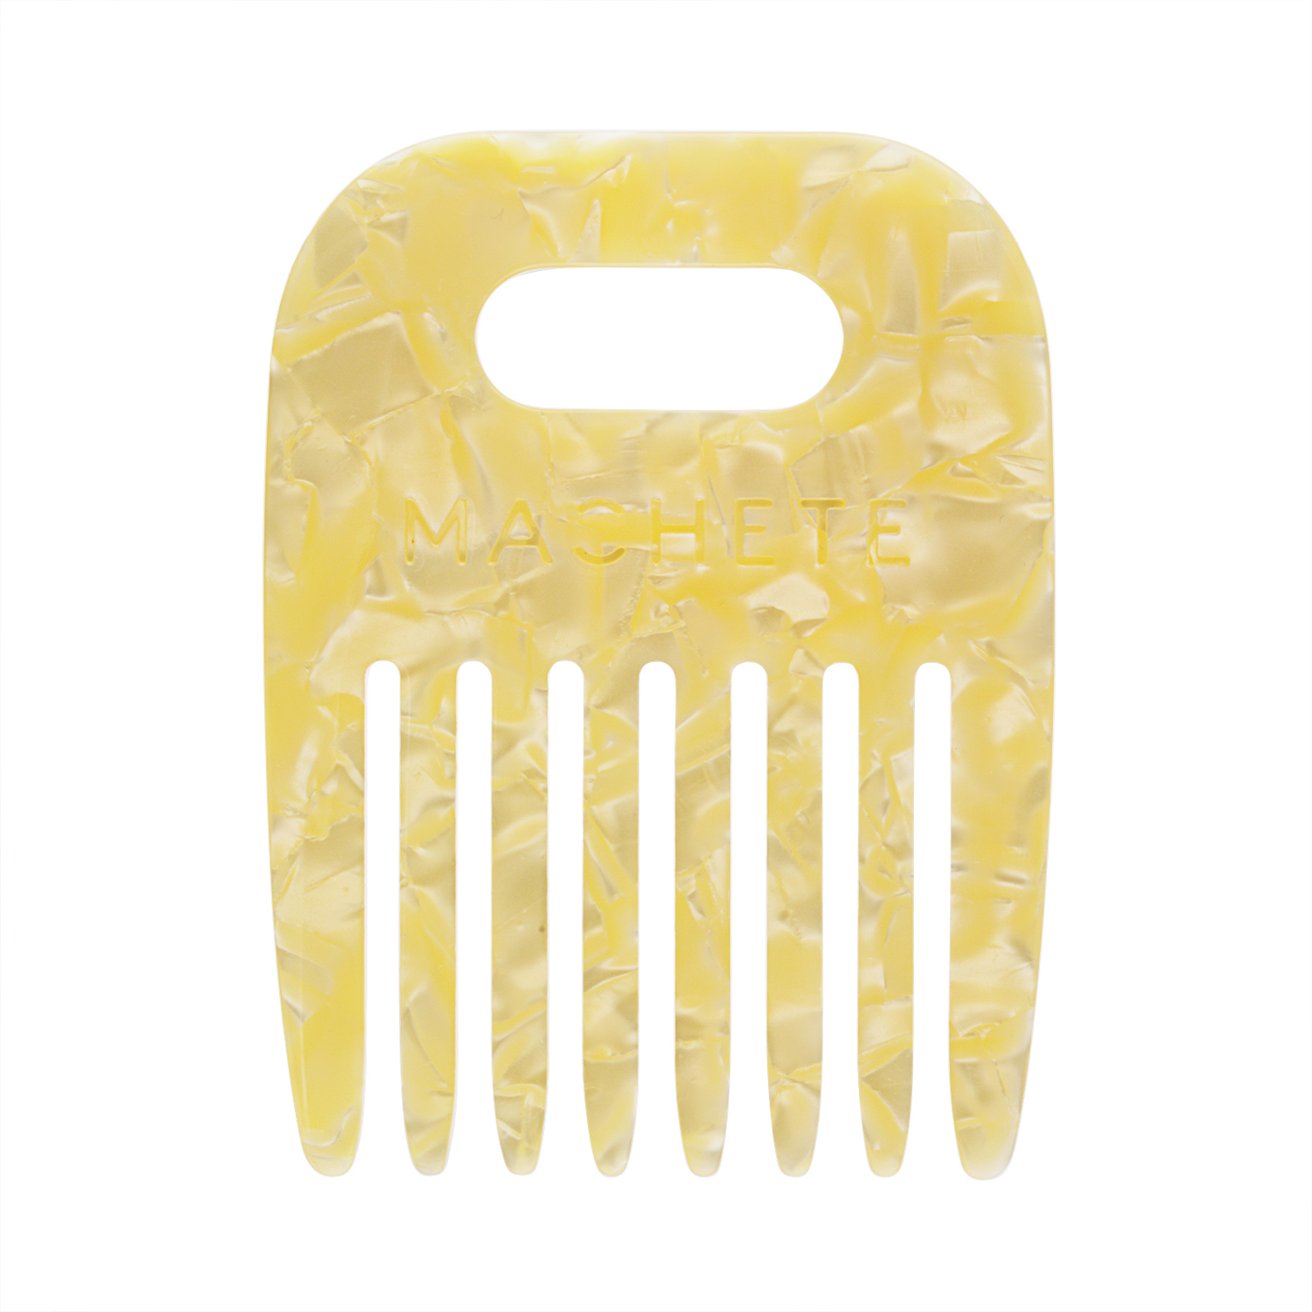 Machete Comb in Butter yellow